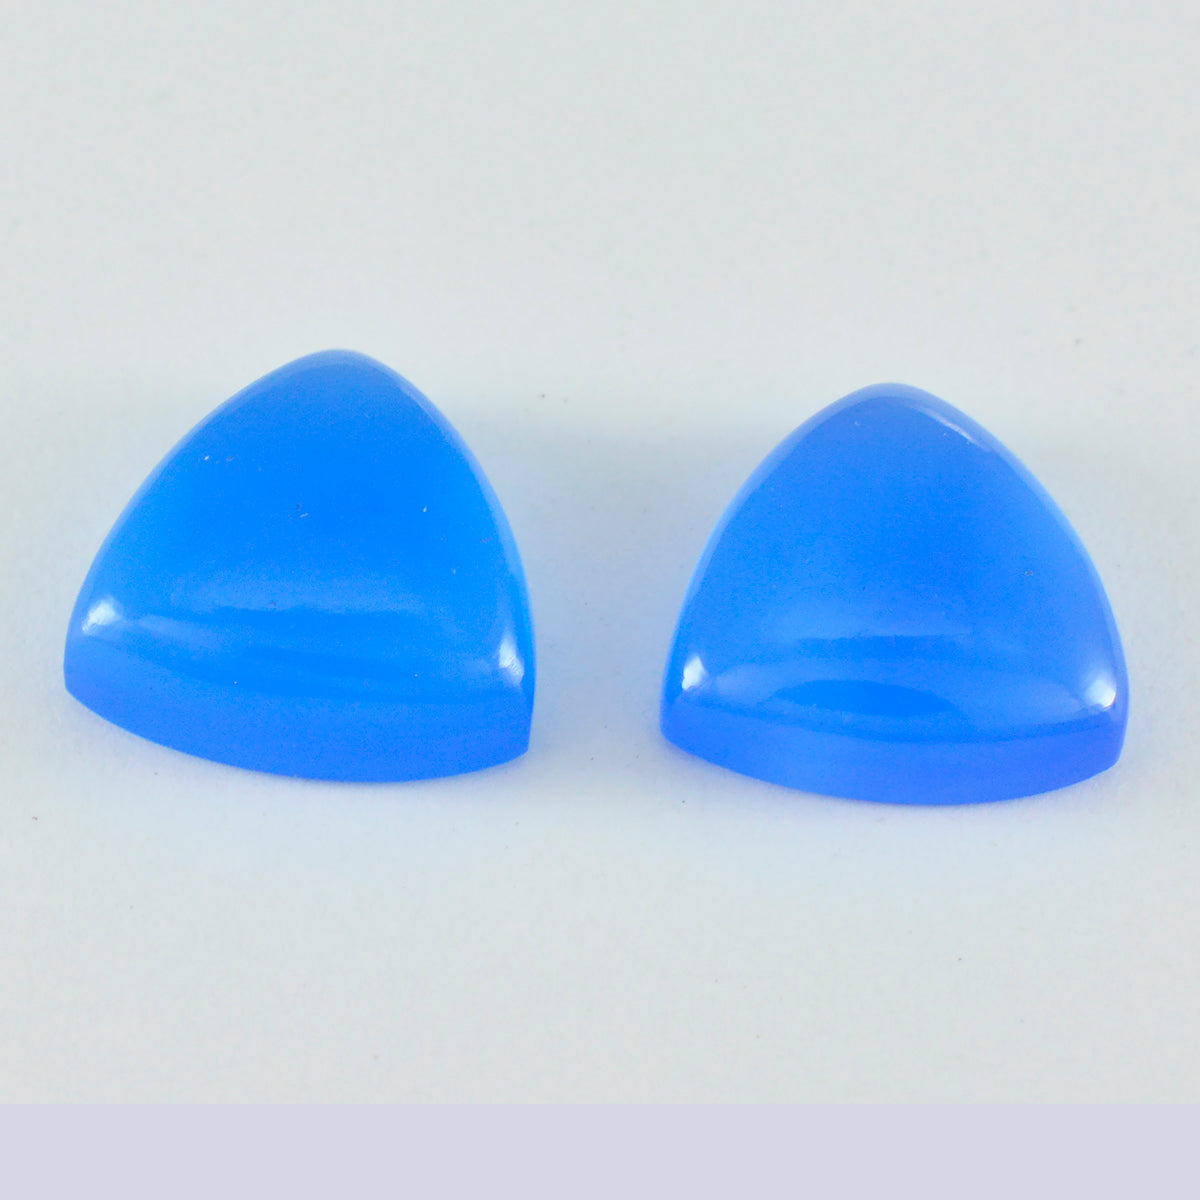 Riyogems 1 Stück blauer Chalcedon-Cabochon, 12 x 12 mm, Trillion-Form, AAA-Qualitätsstein